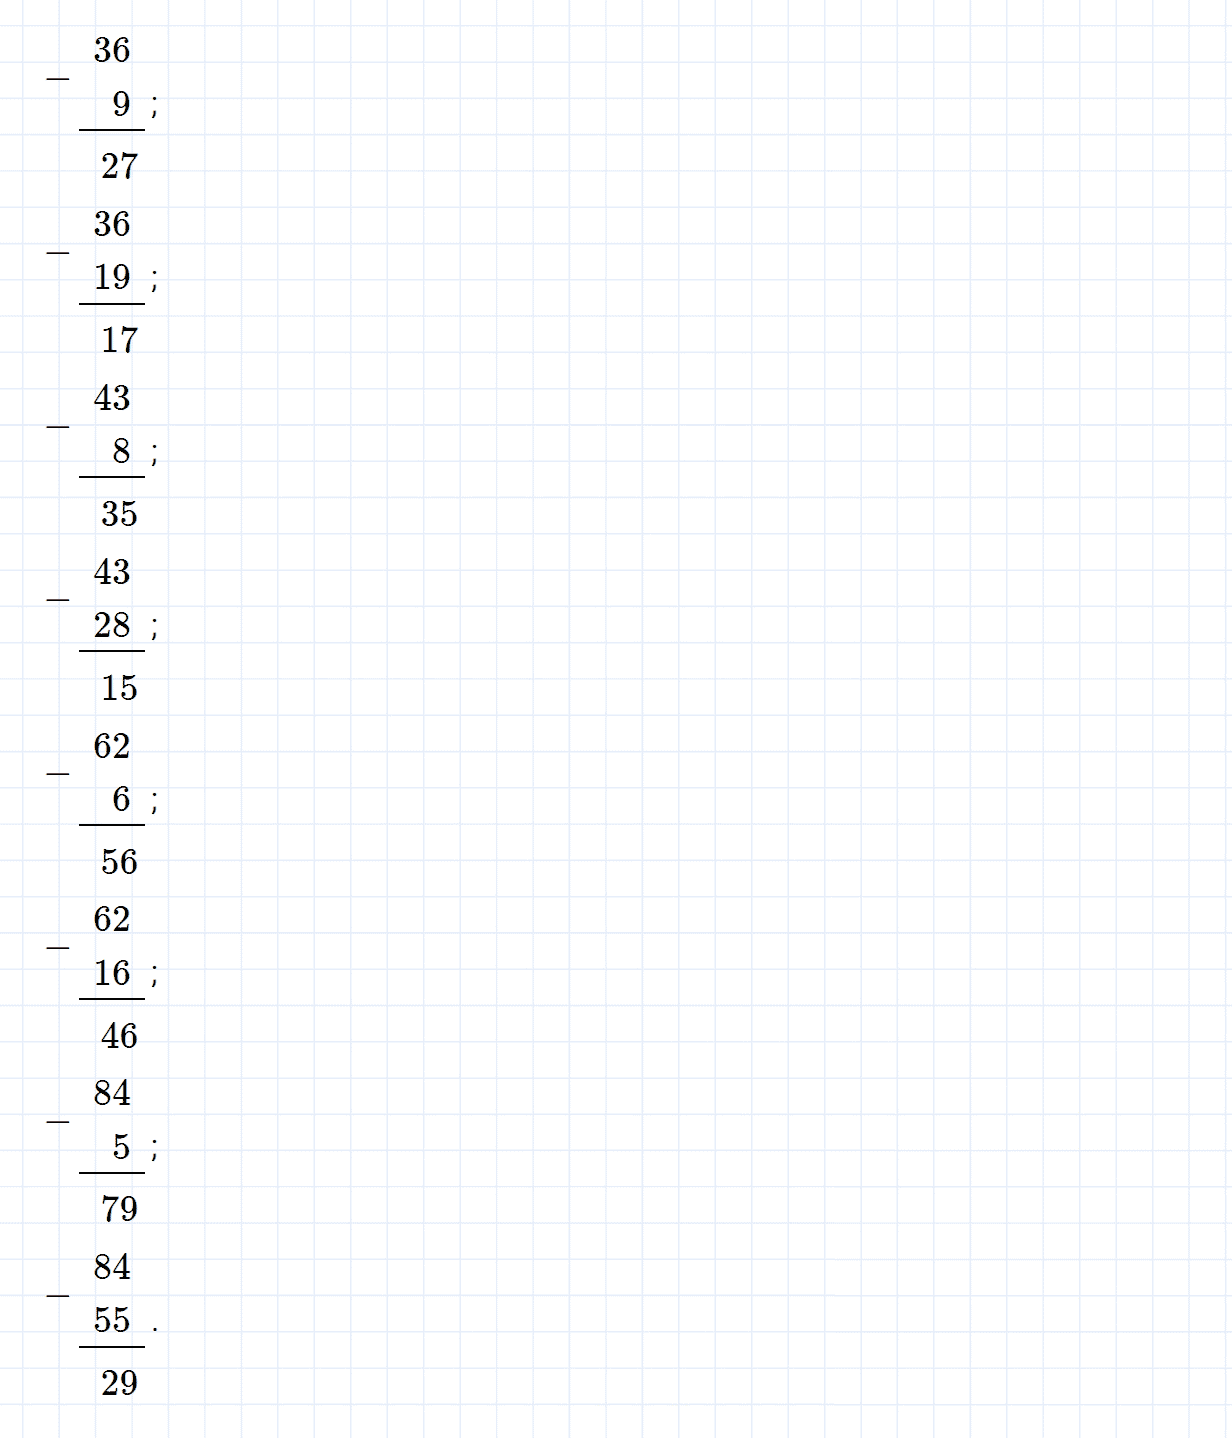 Математика страница 66 упражнение 11